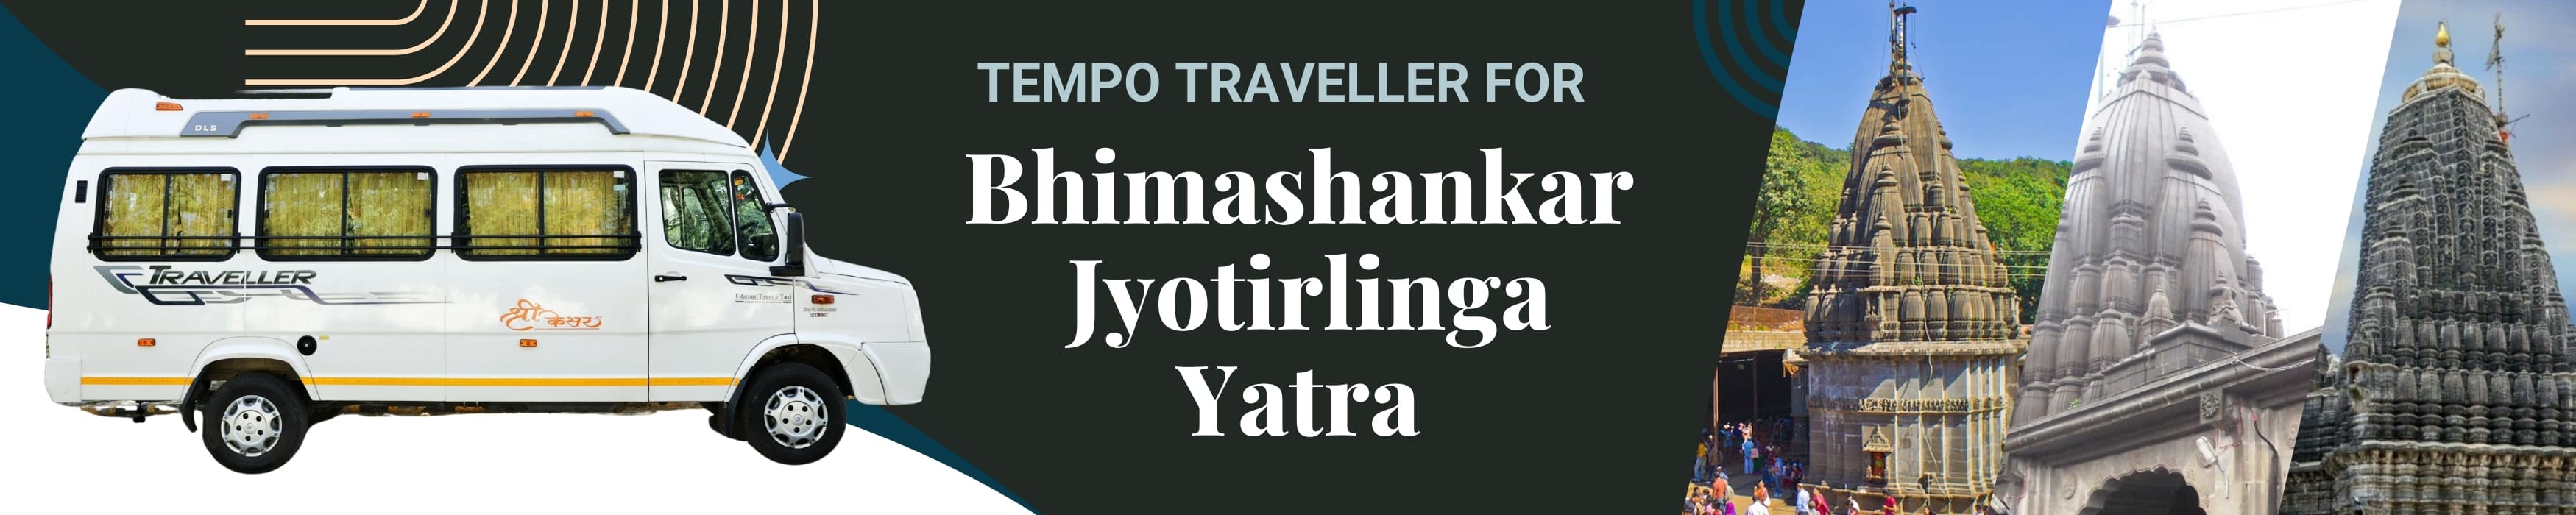 Hire a Tempo Traveller on rent For Bhimashankar Jyotirlinga Yatra